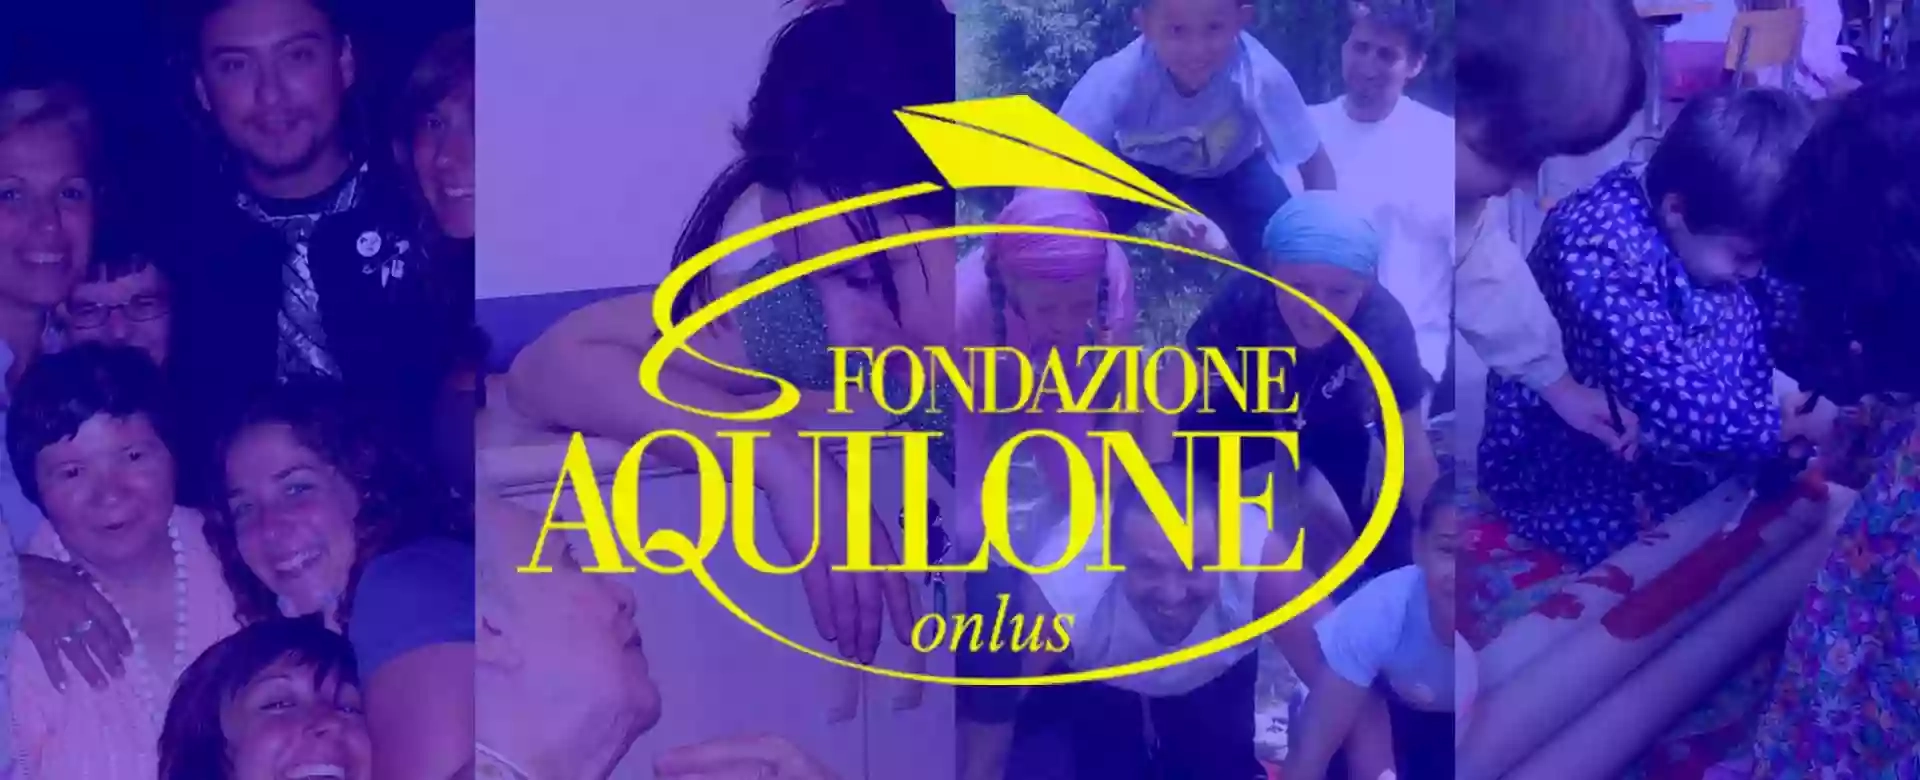 Fondazione Aquilone Onlus